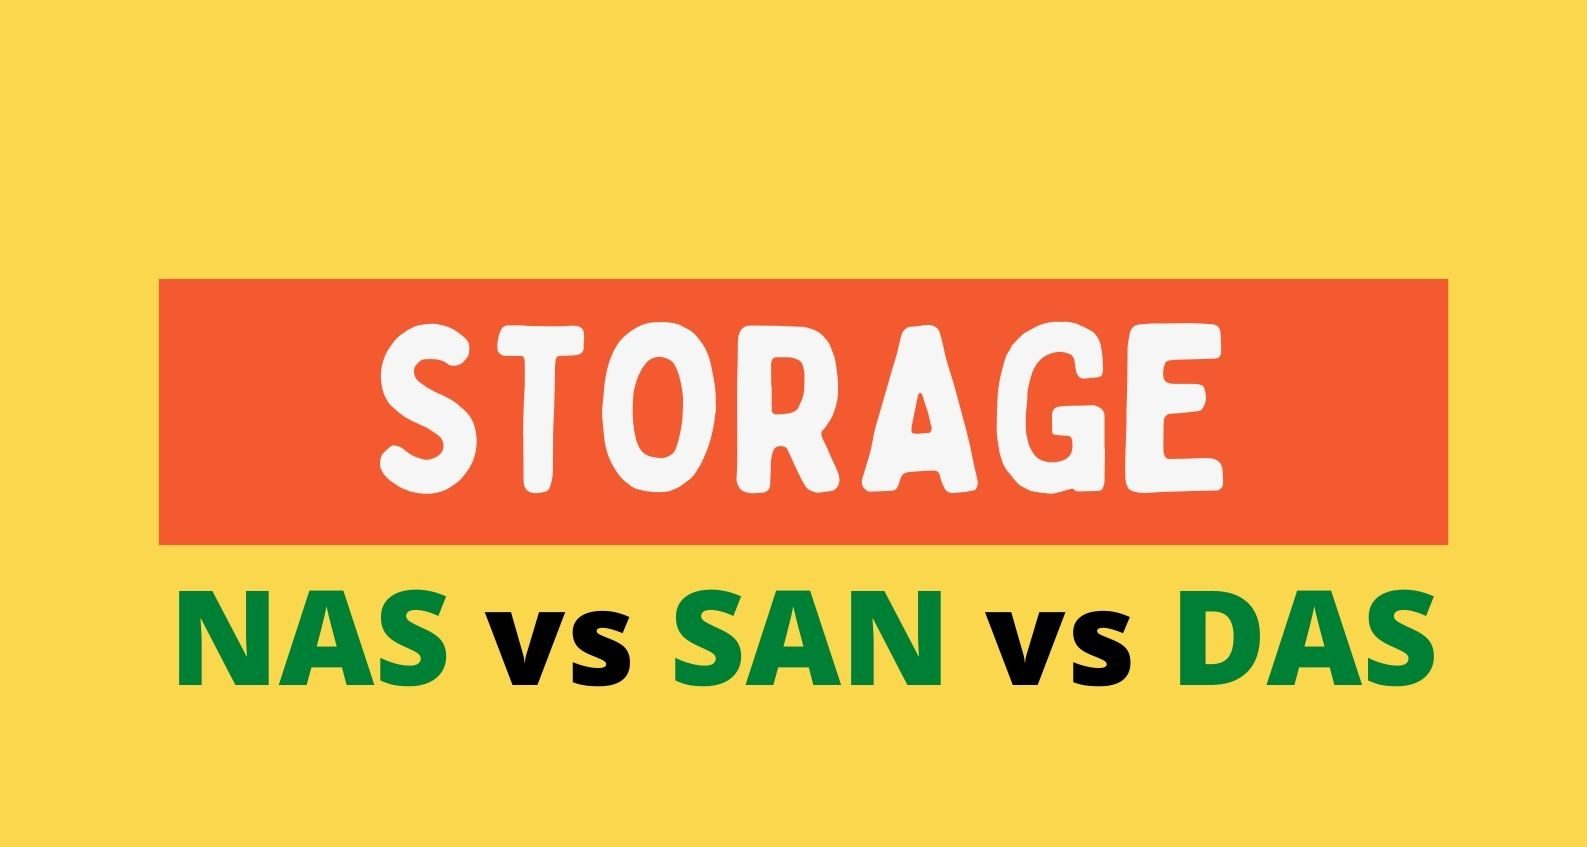 Storage concepts NAS, DAS & SAN Explained